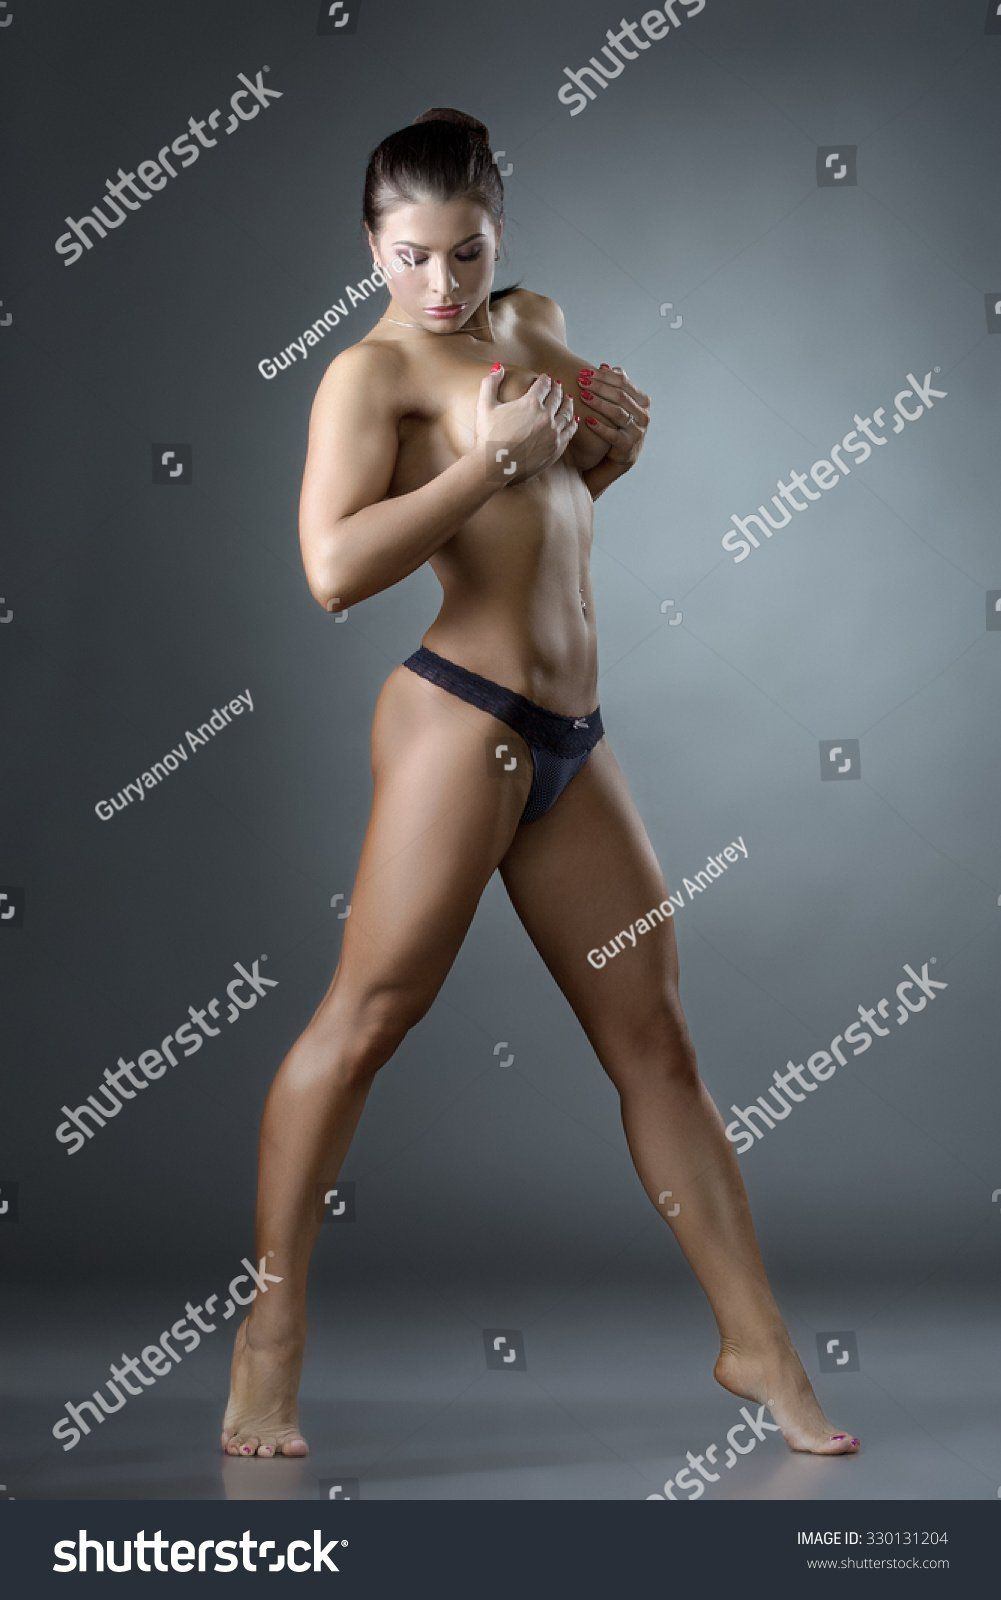 Girl Athlete Nude